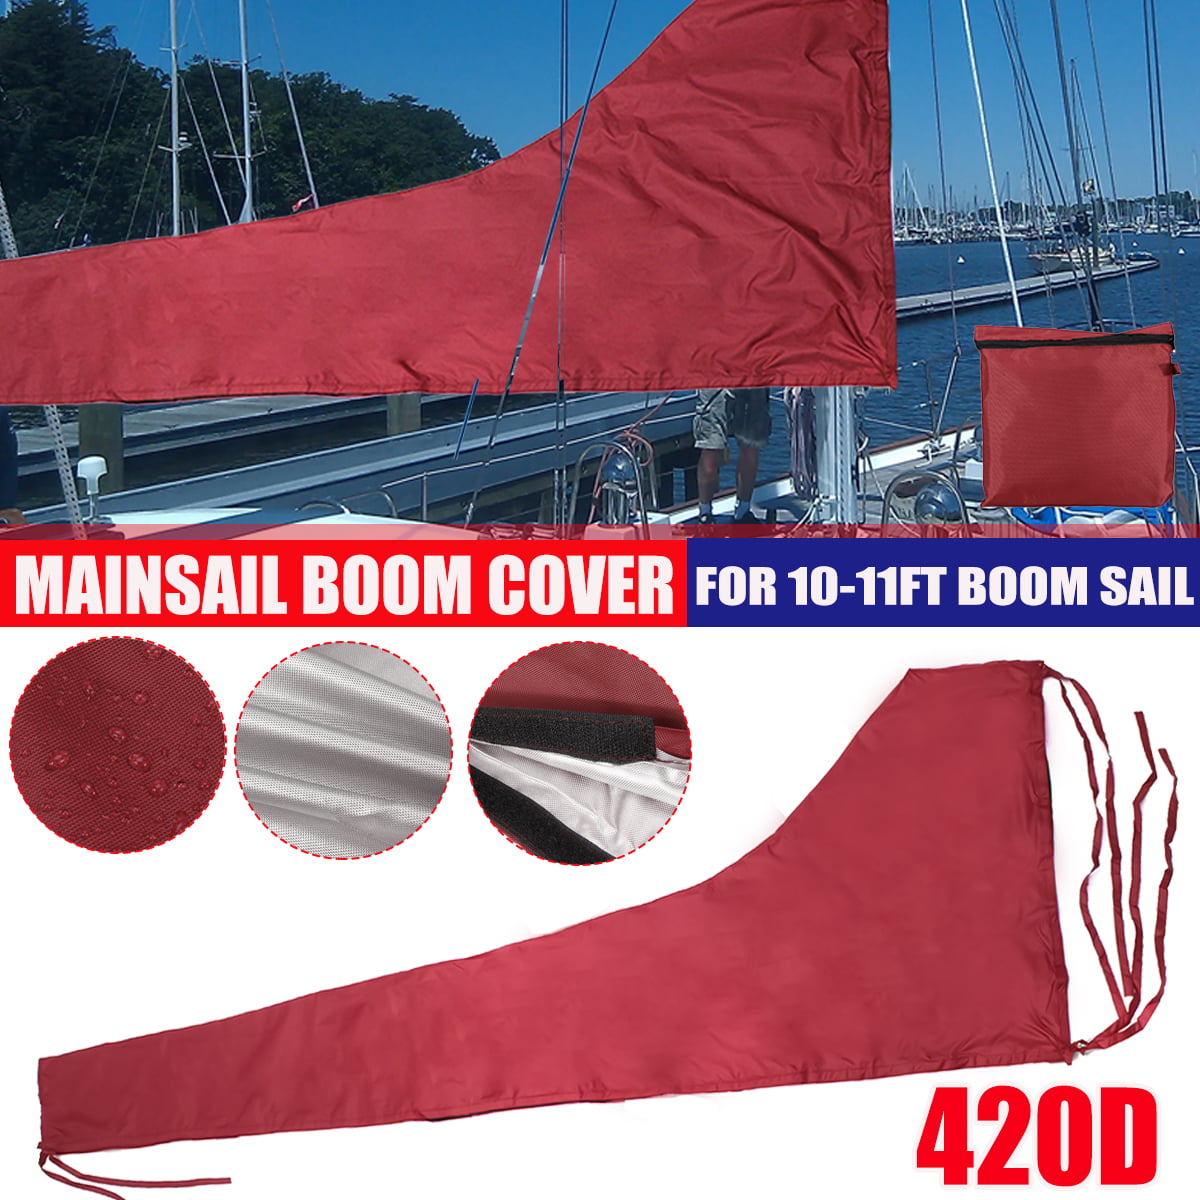 Sail cover-mainsail cover-boat cover•premium durable fabric•multi colour choice 